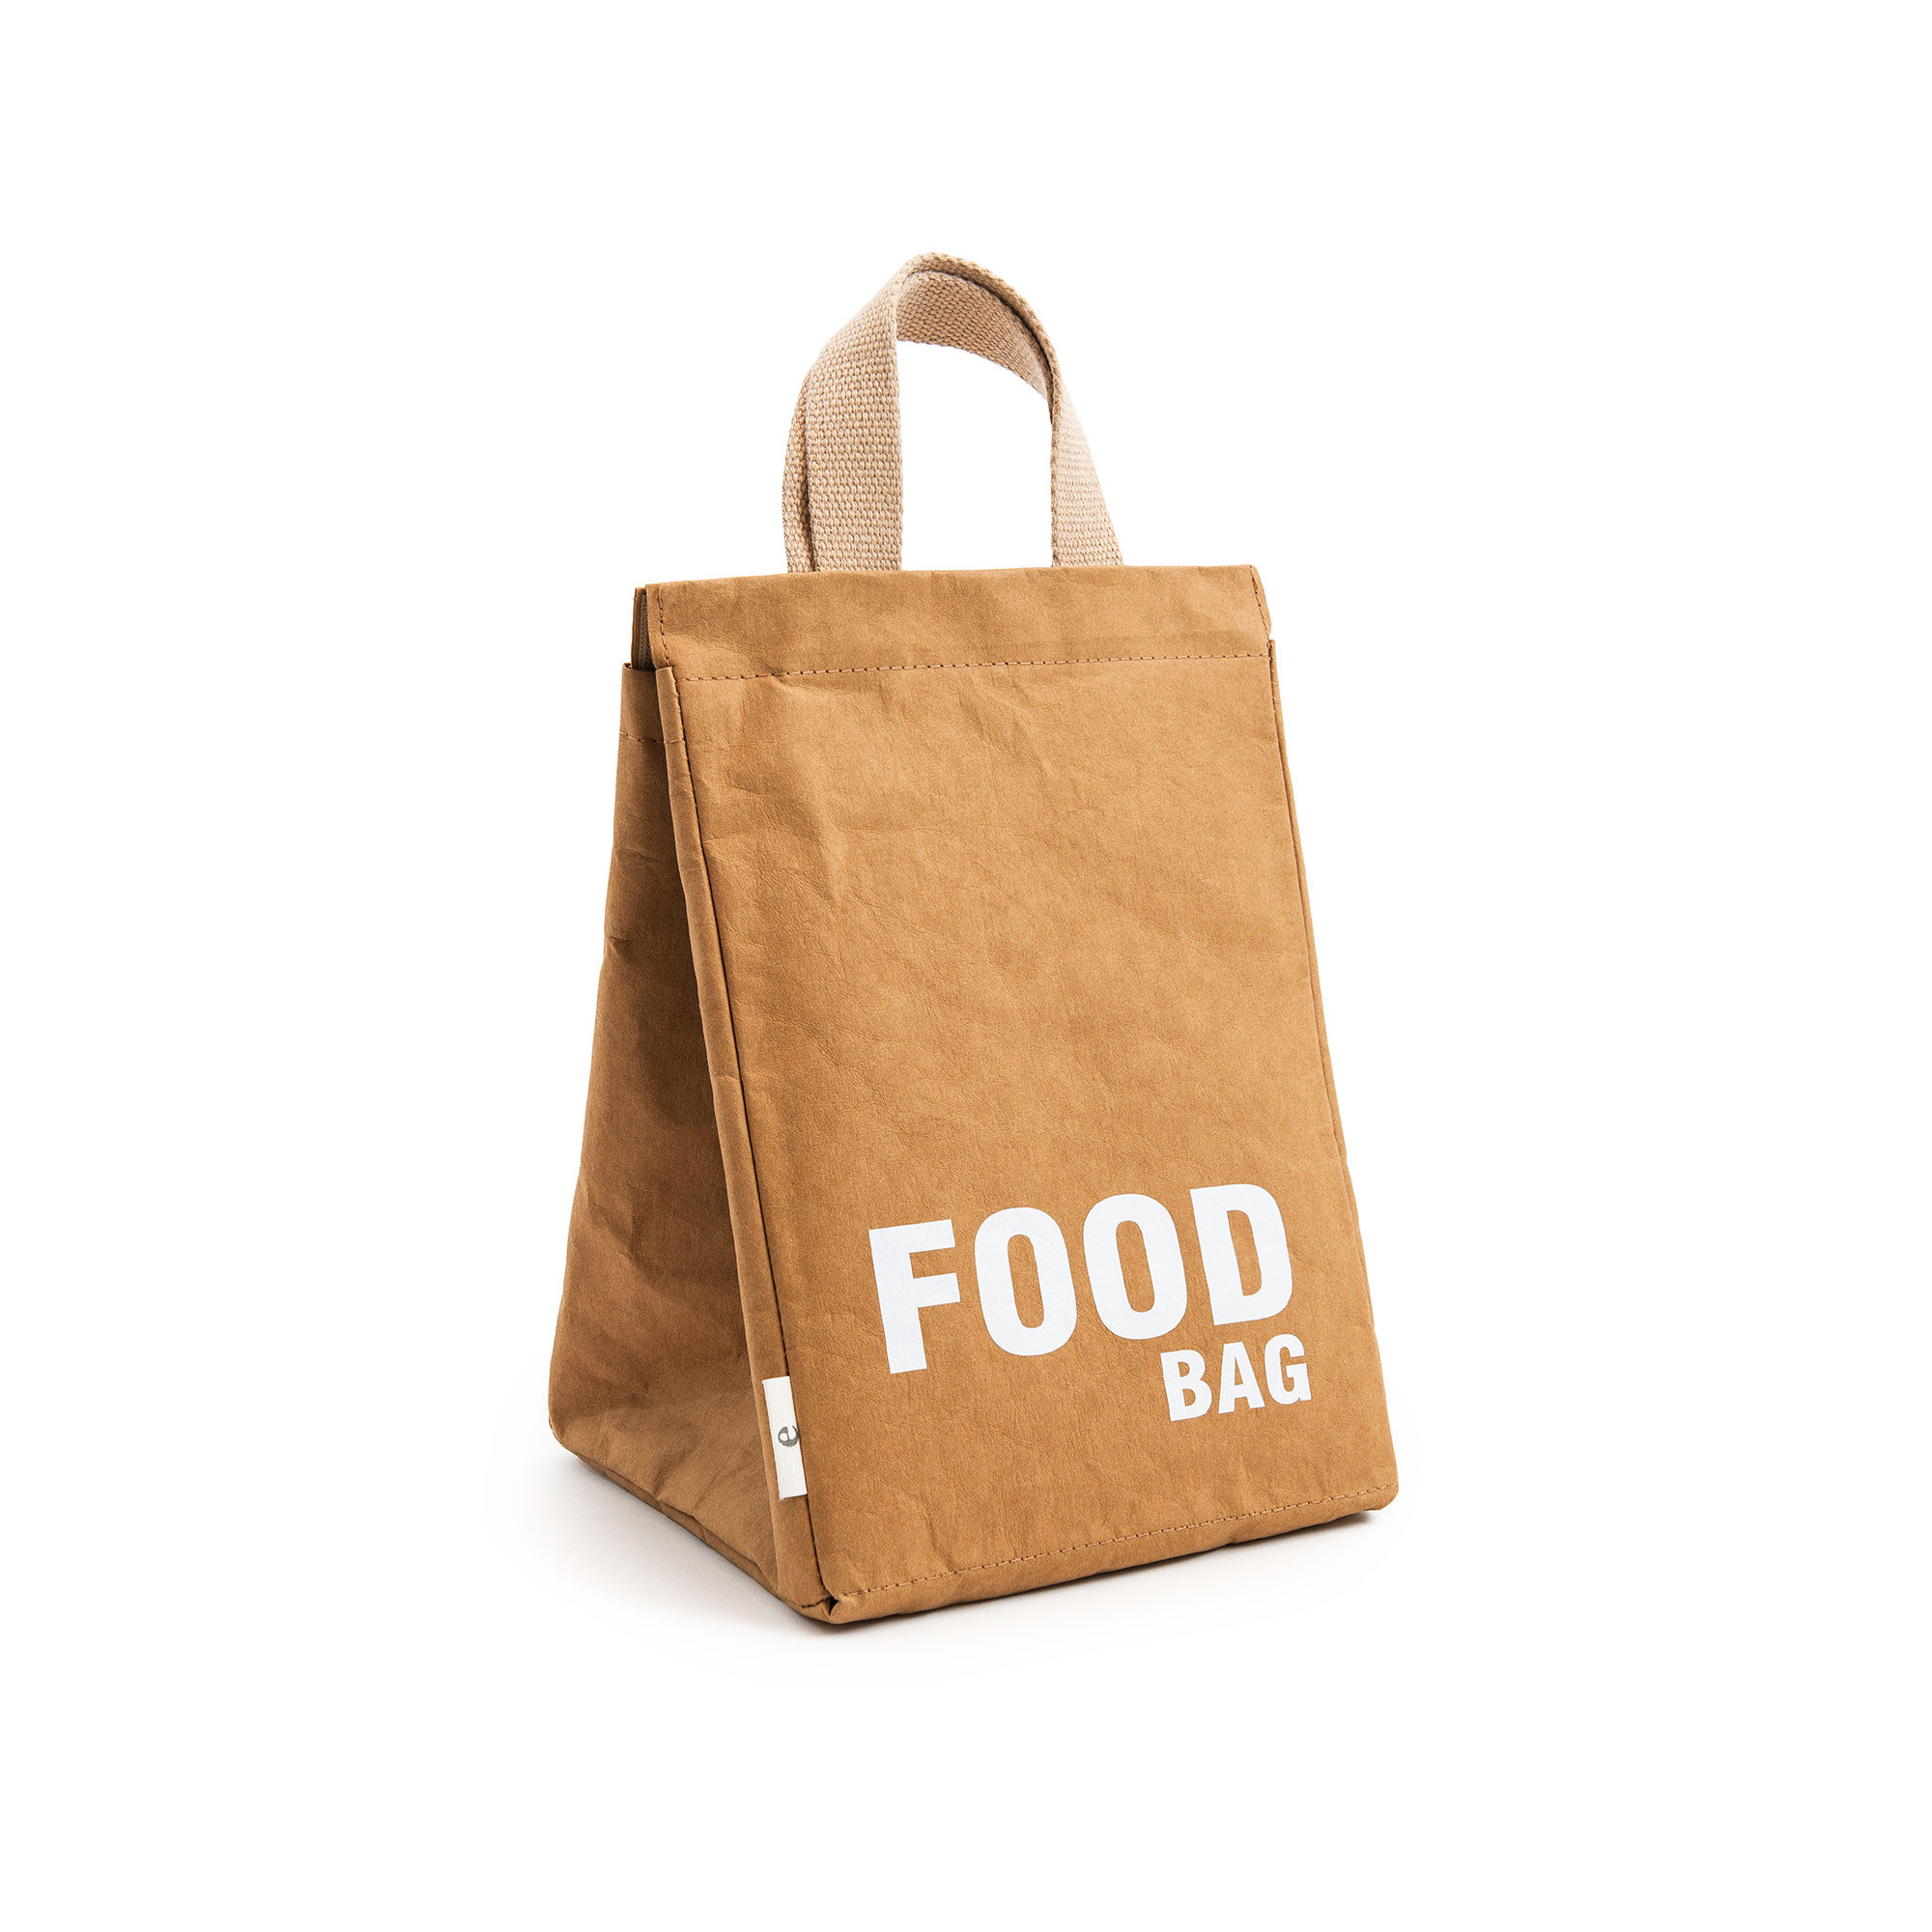 Food bag sacchetto a portata di manico havana